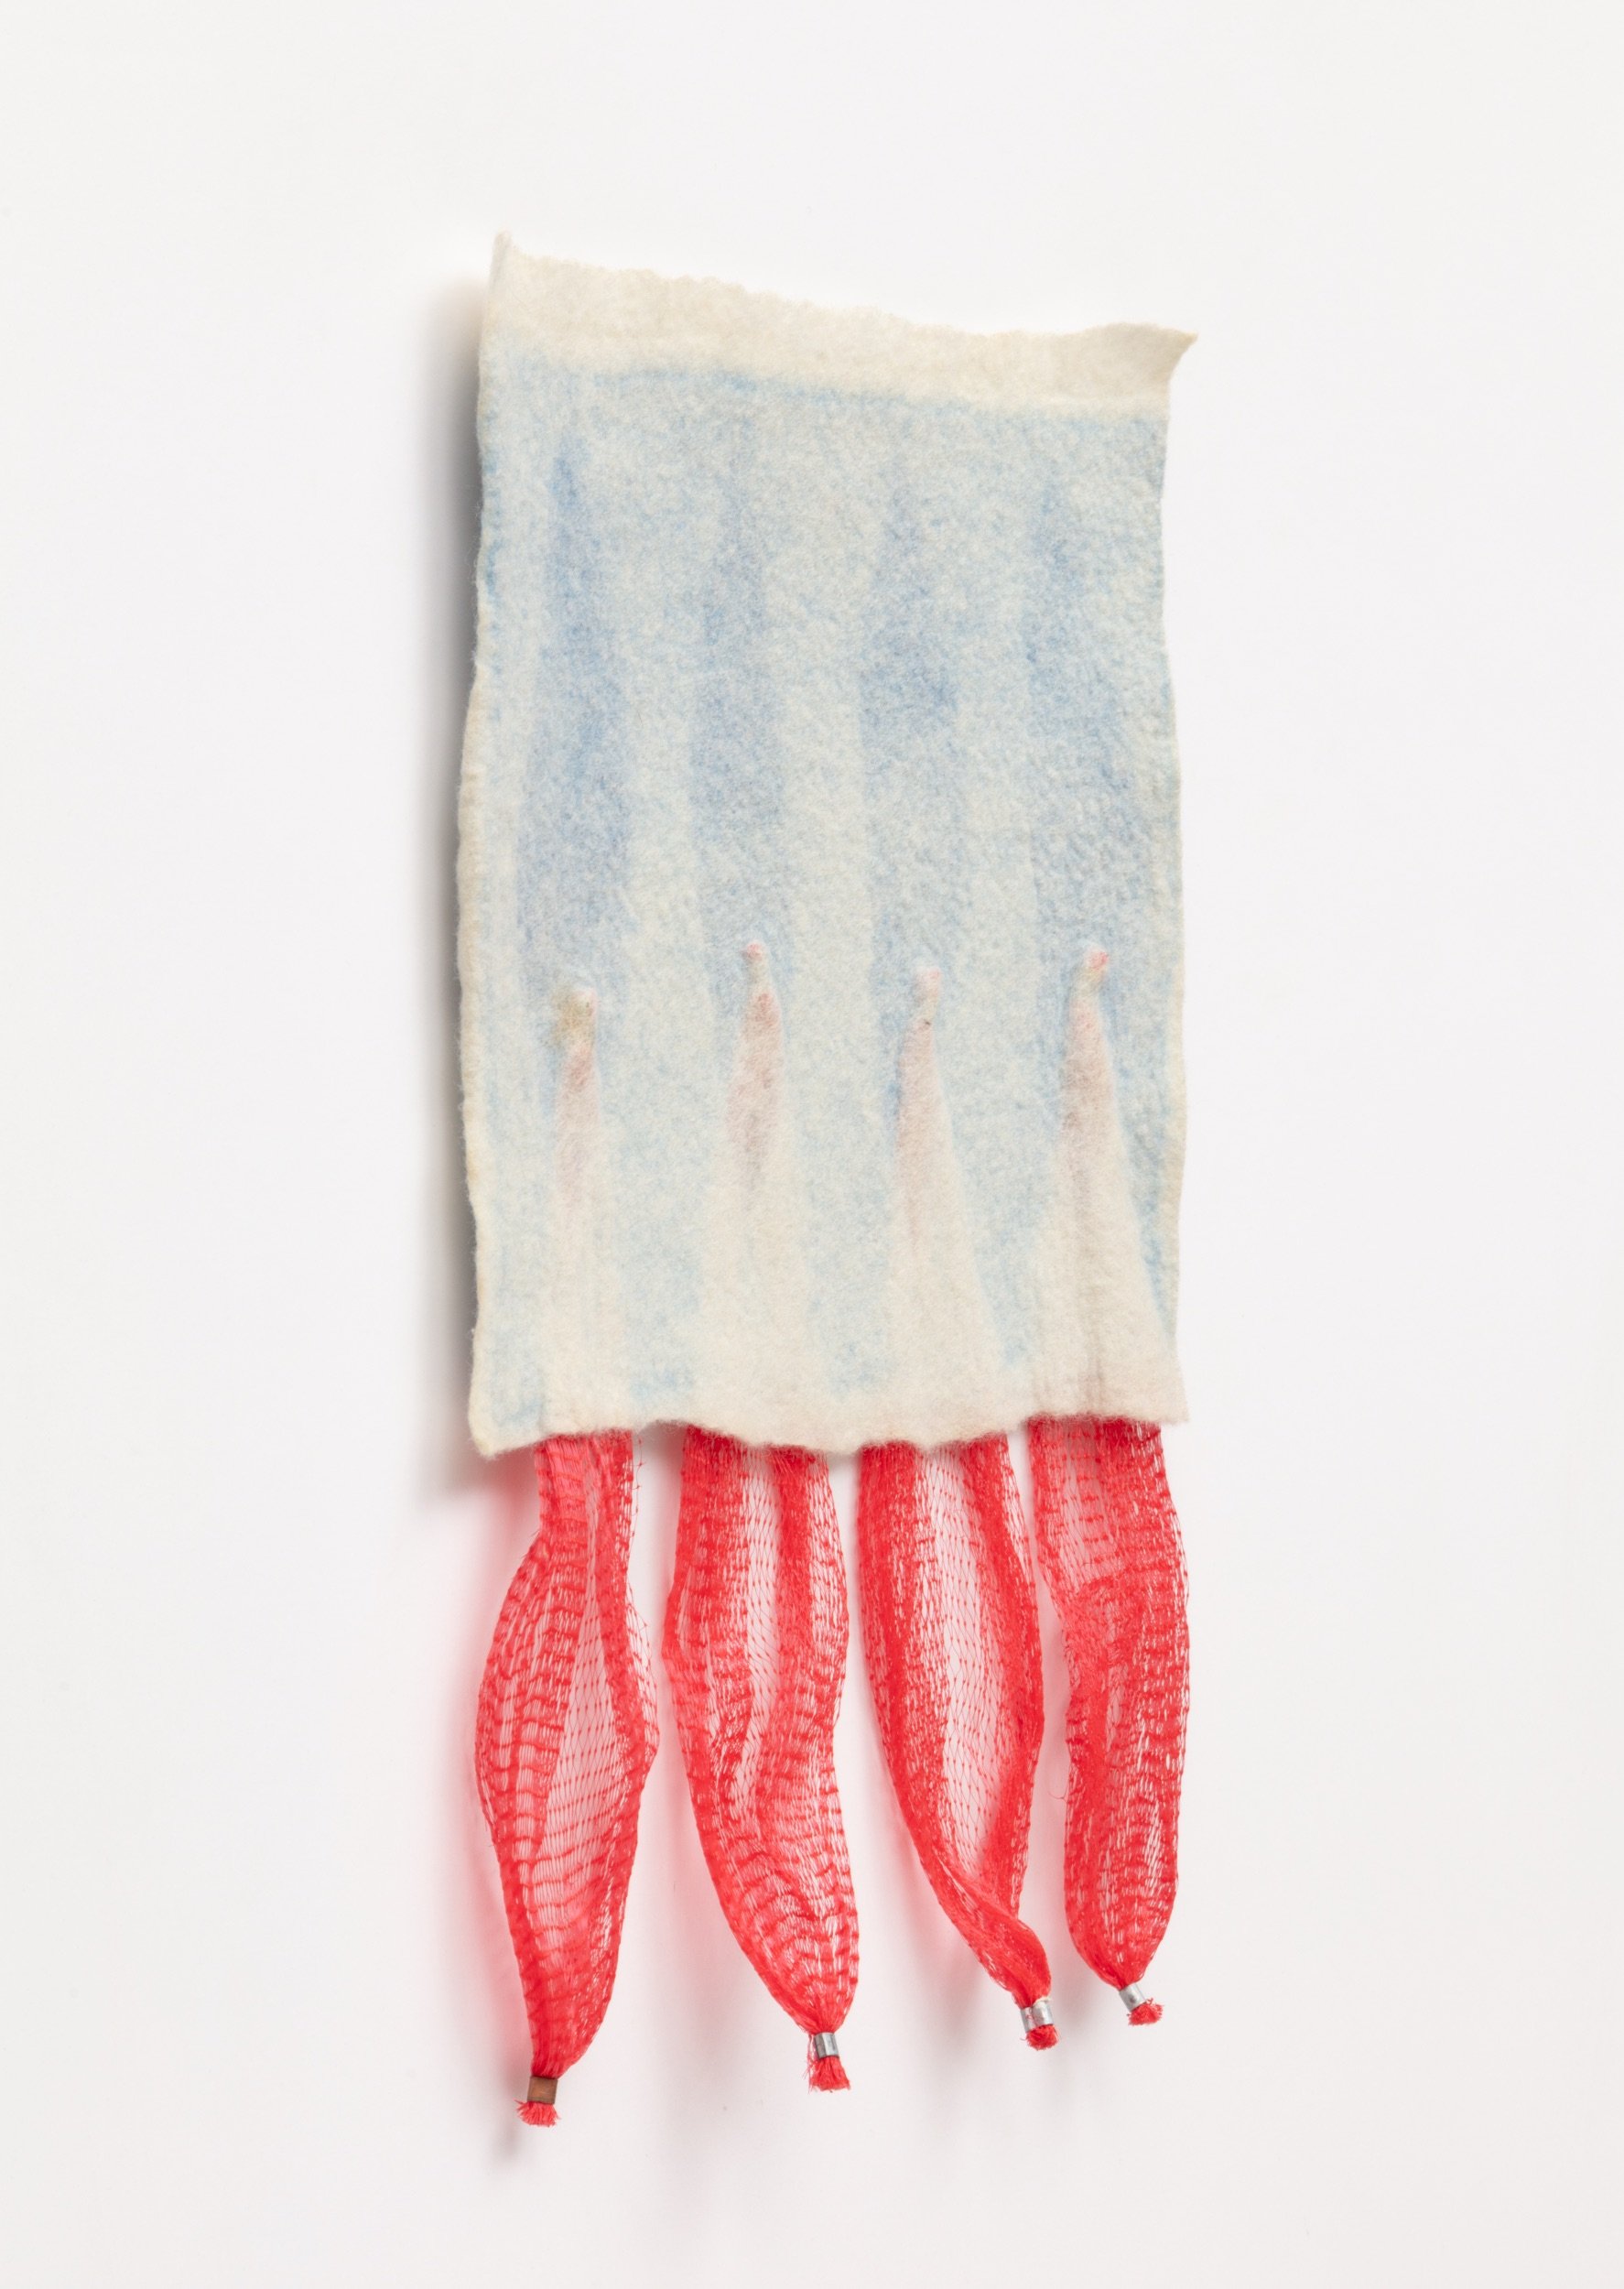  Untitled, 2021  Handfelted merino wool, plastic produce nets 